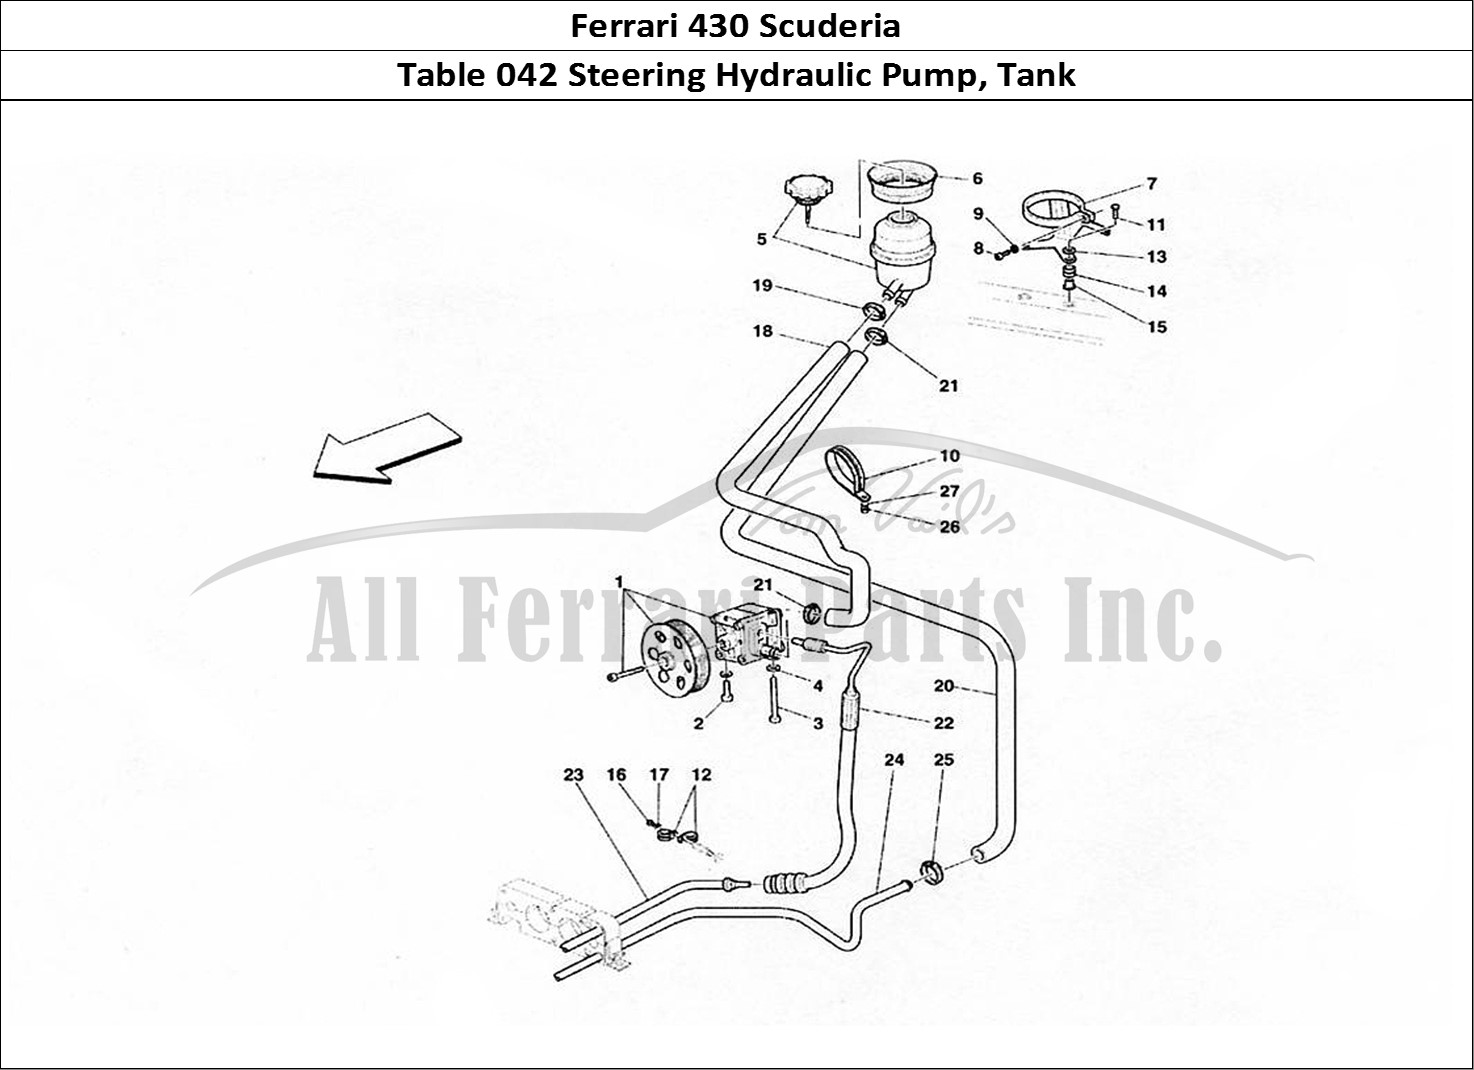 Ferrari Parts Ferrari 430 Scuderia Page 042 Hydraulic Steering Pump a